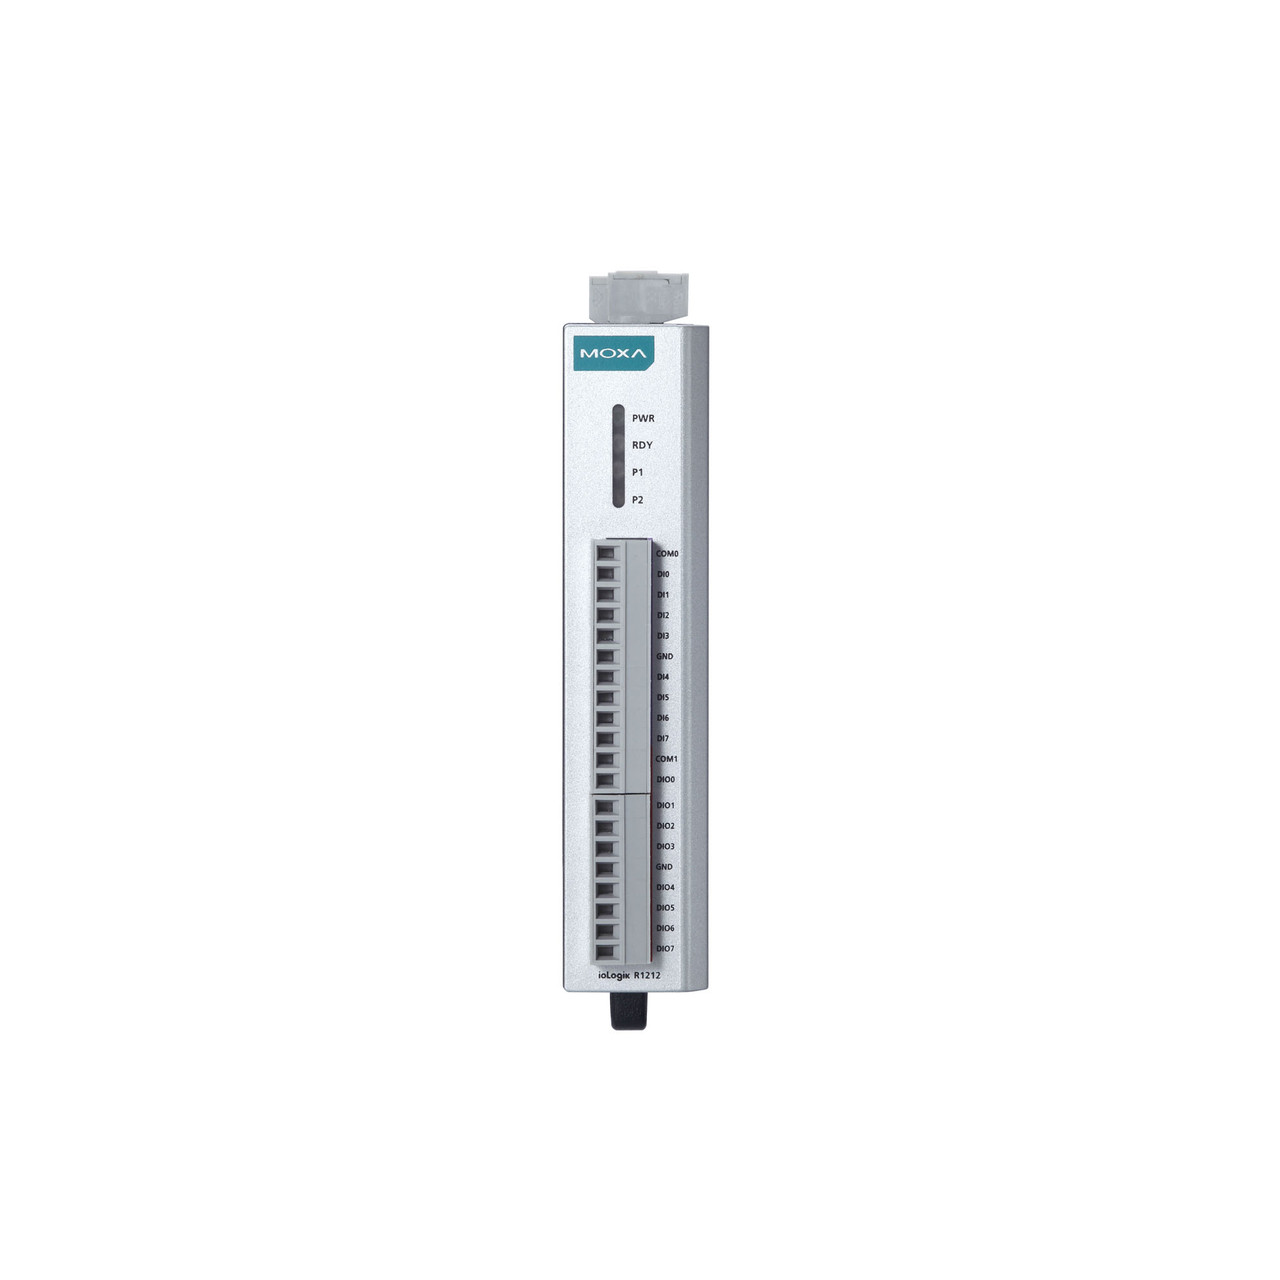 Thermometer 12V Ambient Temperature Sensor -30°F - 120°F